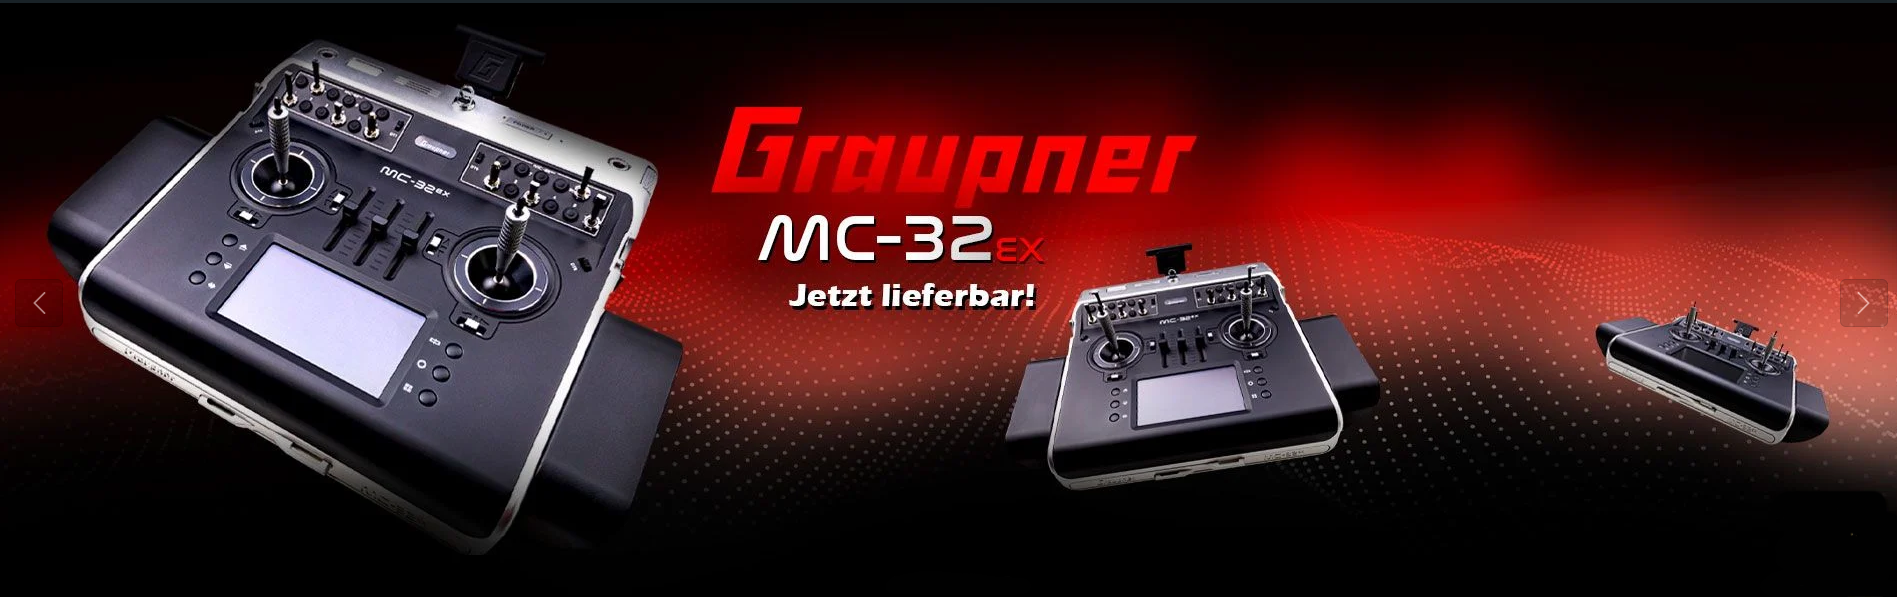 Graupner MC-32ex